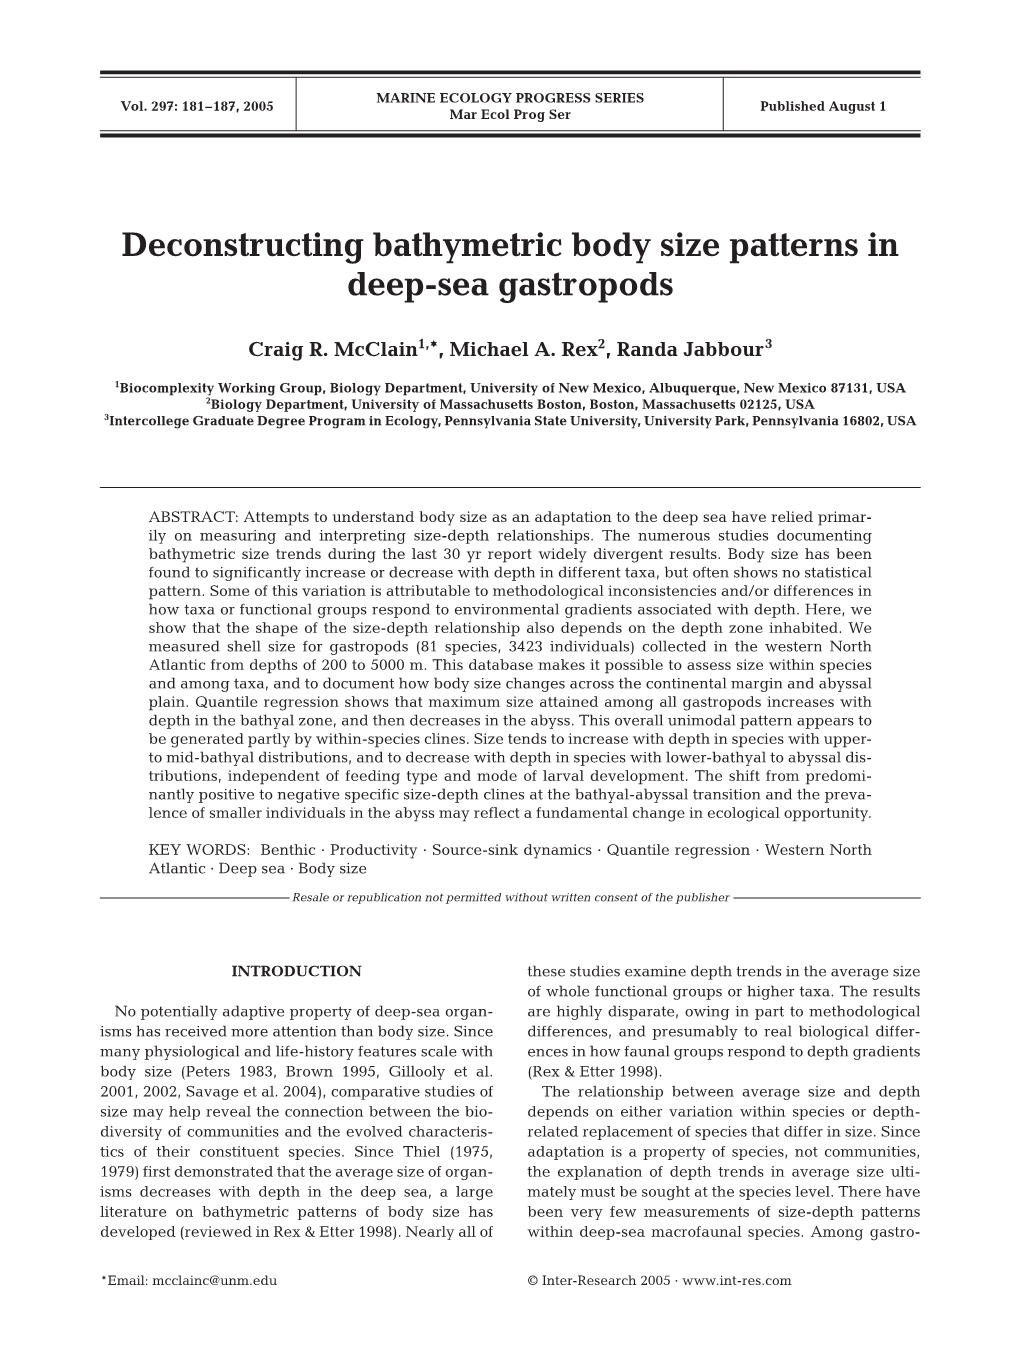 Deconstructing Bathymetric Body Size Patterns in Deep-Sea Gastropods